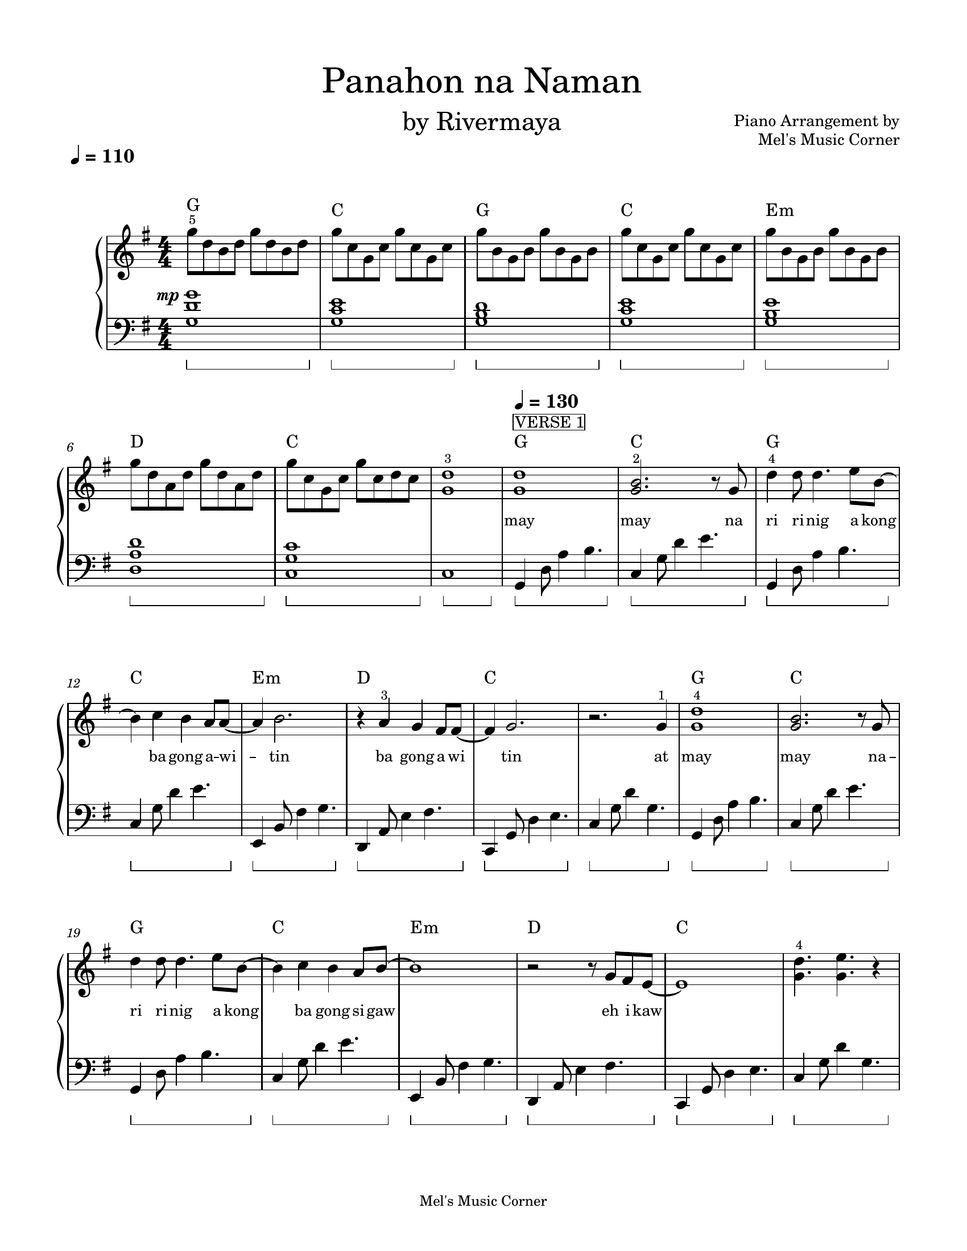 Rivermaya - Panahon na Naman (piano sheet music) by Mel's Music Corner